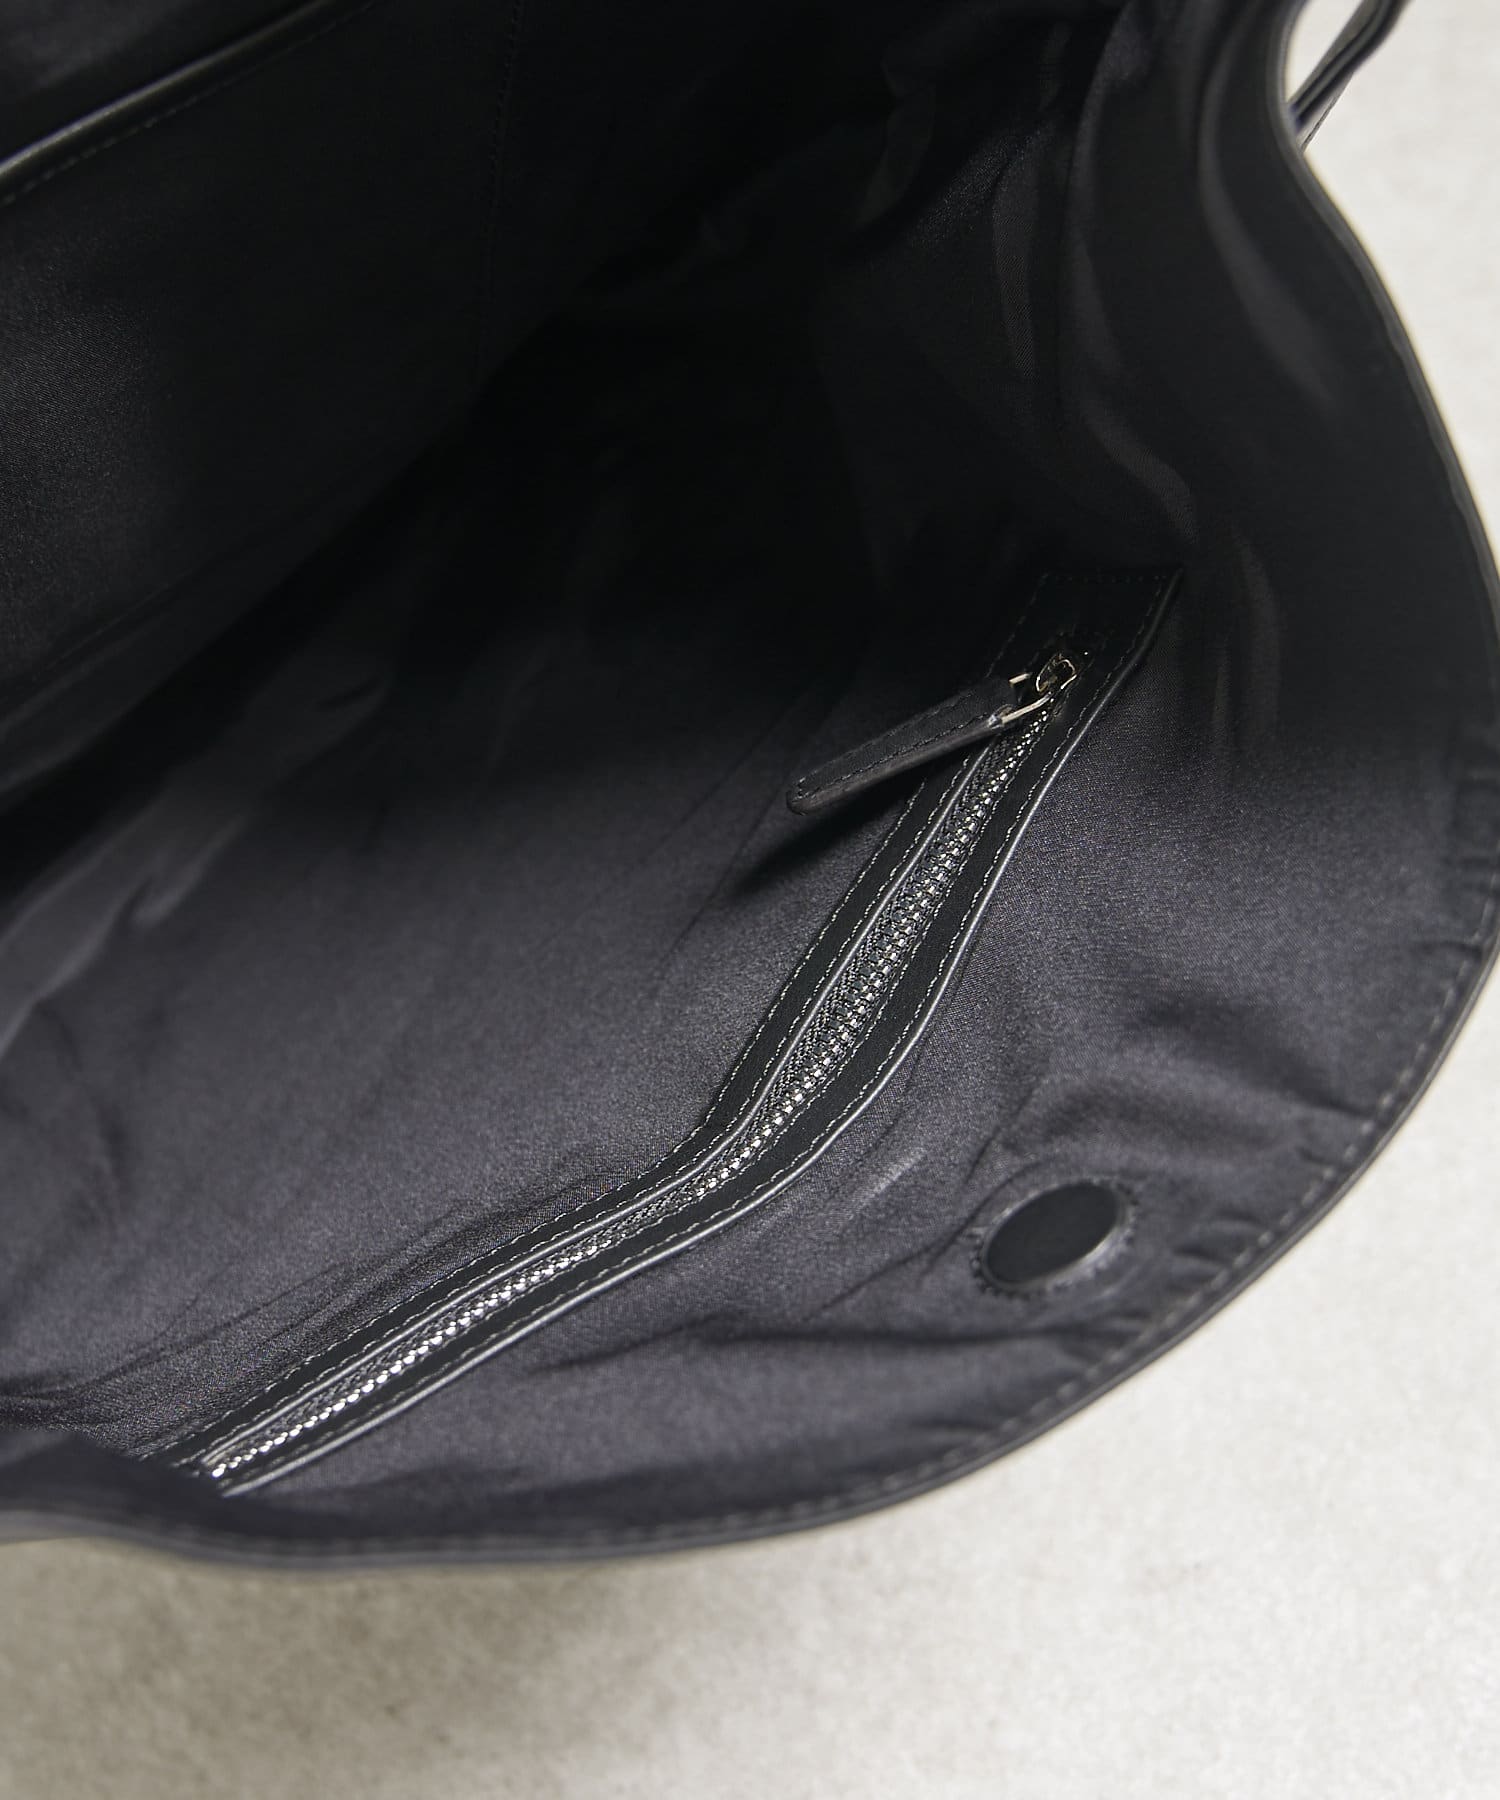 Lui's(ルイス) leather shoulder bag L